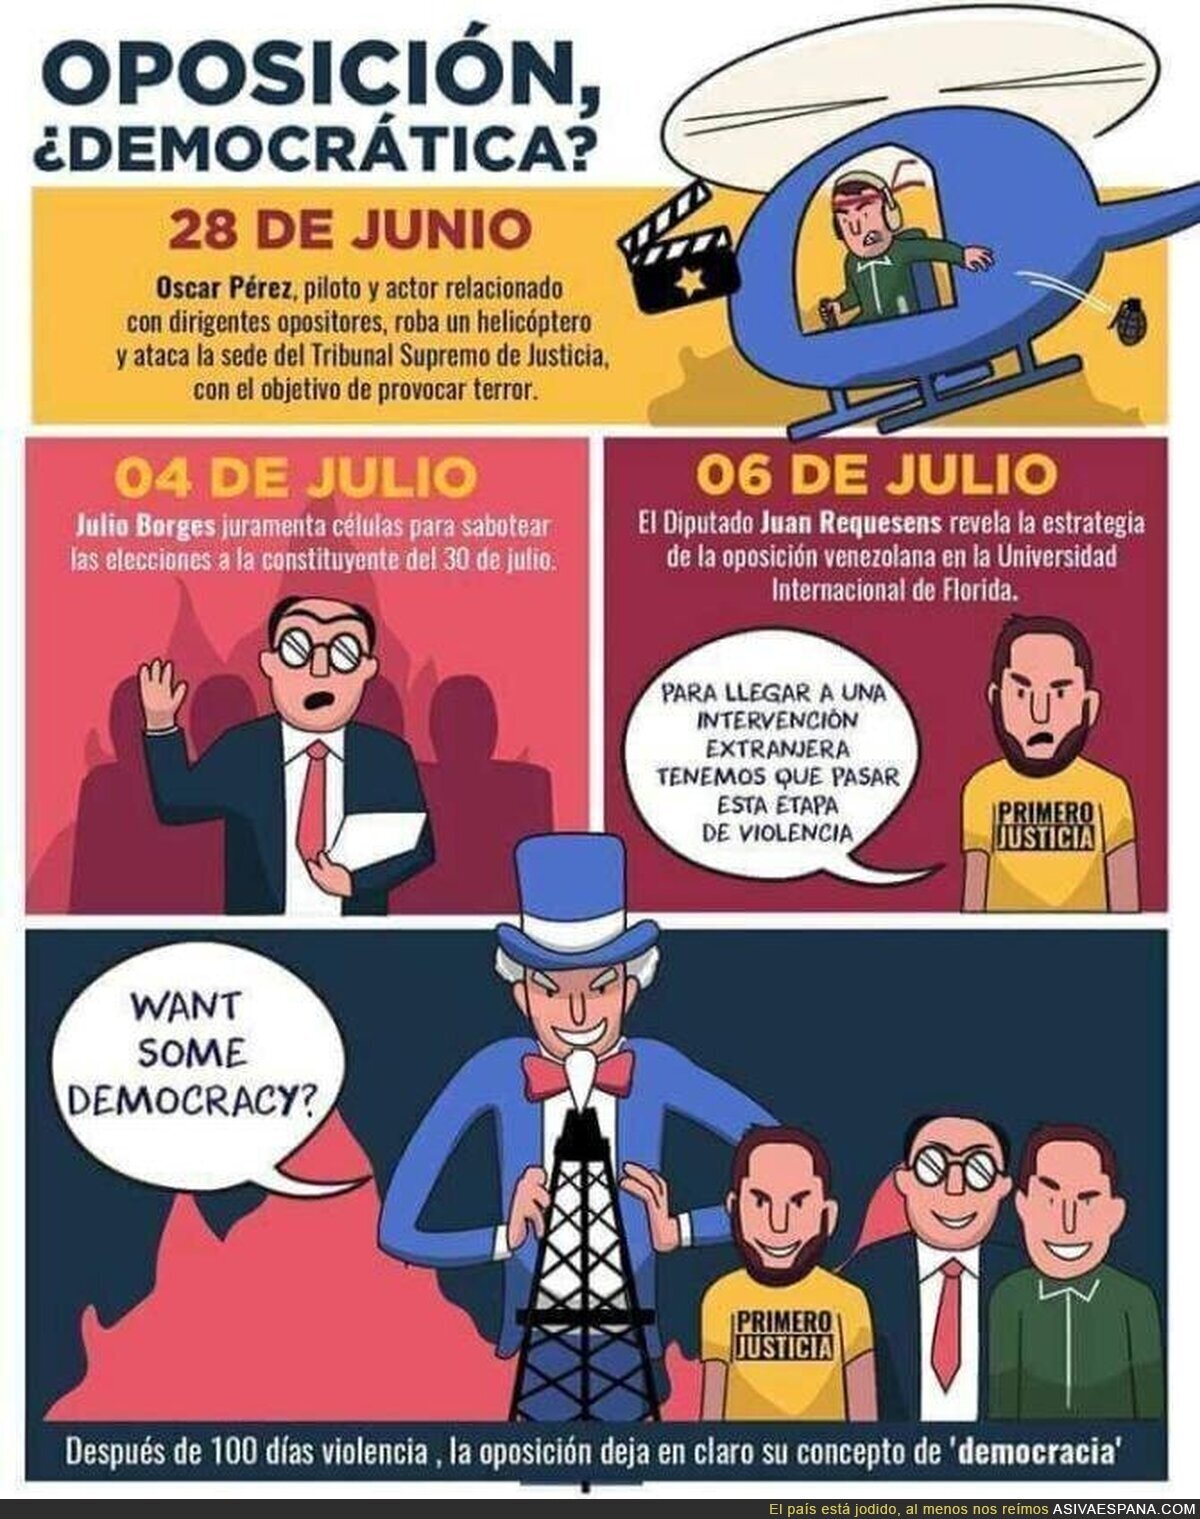 ¿Democratica Oposicion la Venezolan?